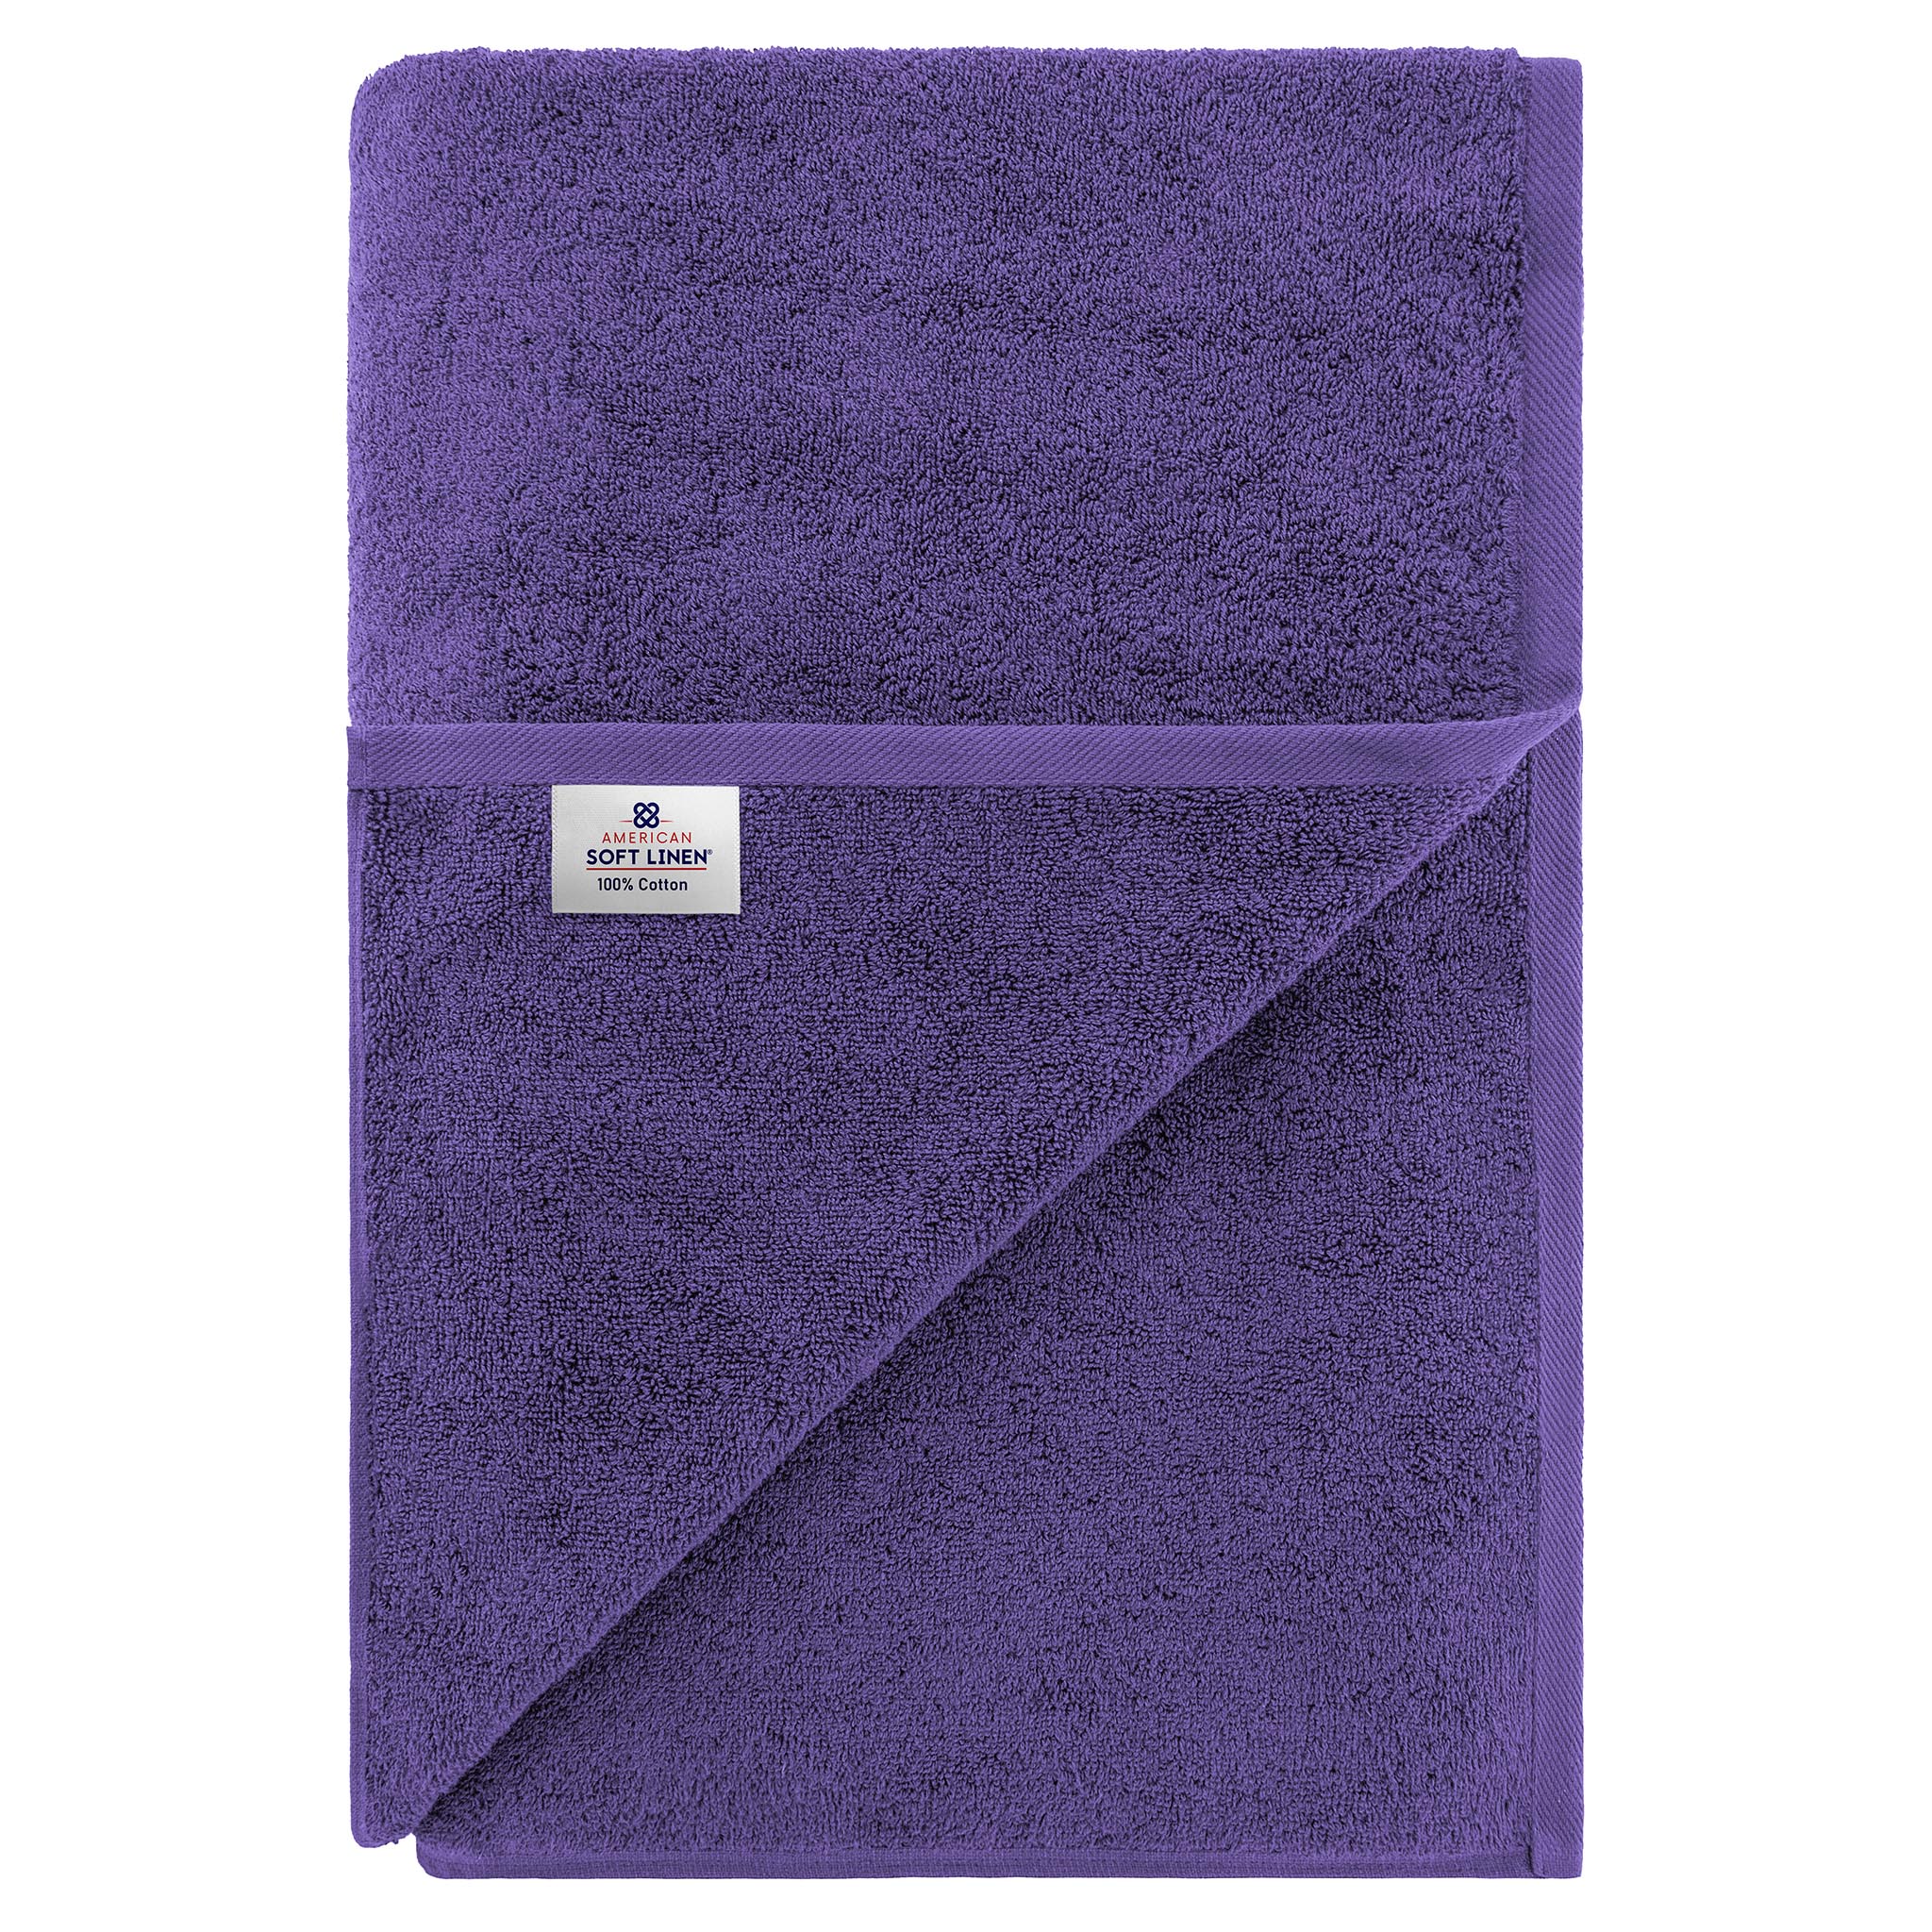 American Soft Linen 100% Ring Spun Cotton 40x80 Inches Oversized Bath Sheets purple-7